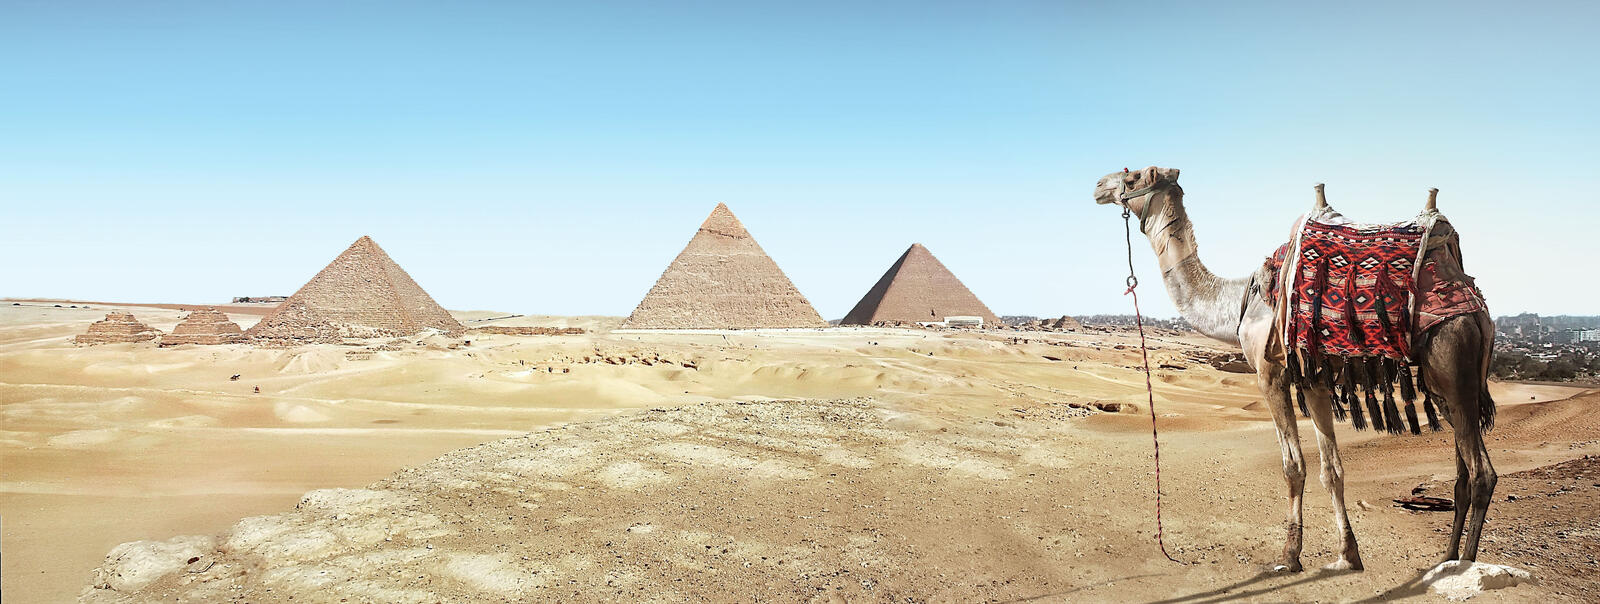 Бесплатное фото Верблюд на фоне пирамид